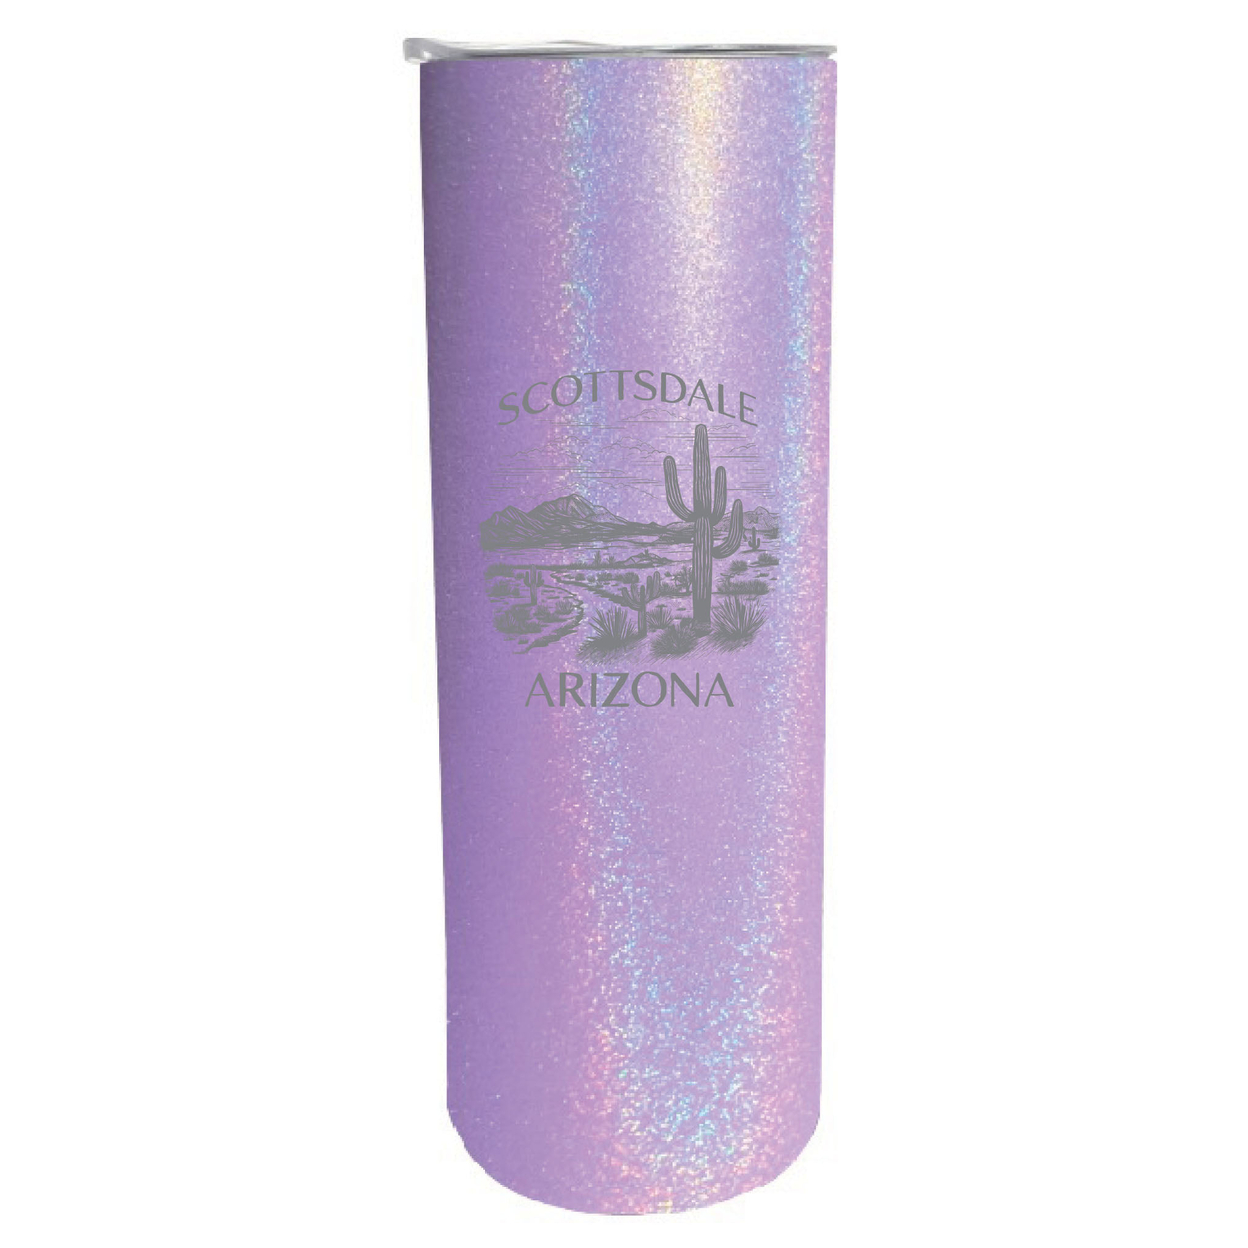 Scottsdale Arizona Souvenir 20 Oz Engraved Insulated Stainless Steel Skinny Tumbler - Purple Glitter,,4-Pack